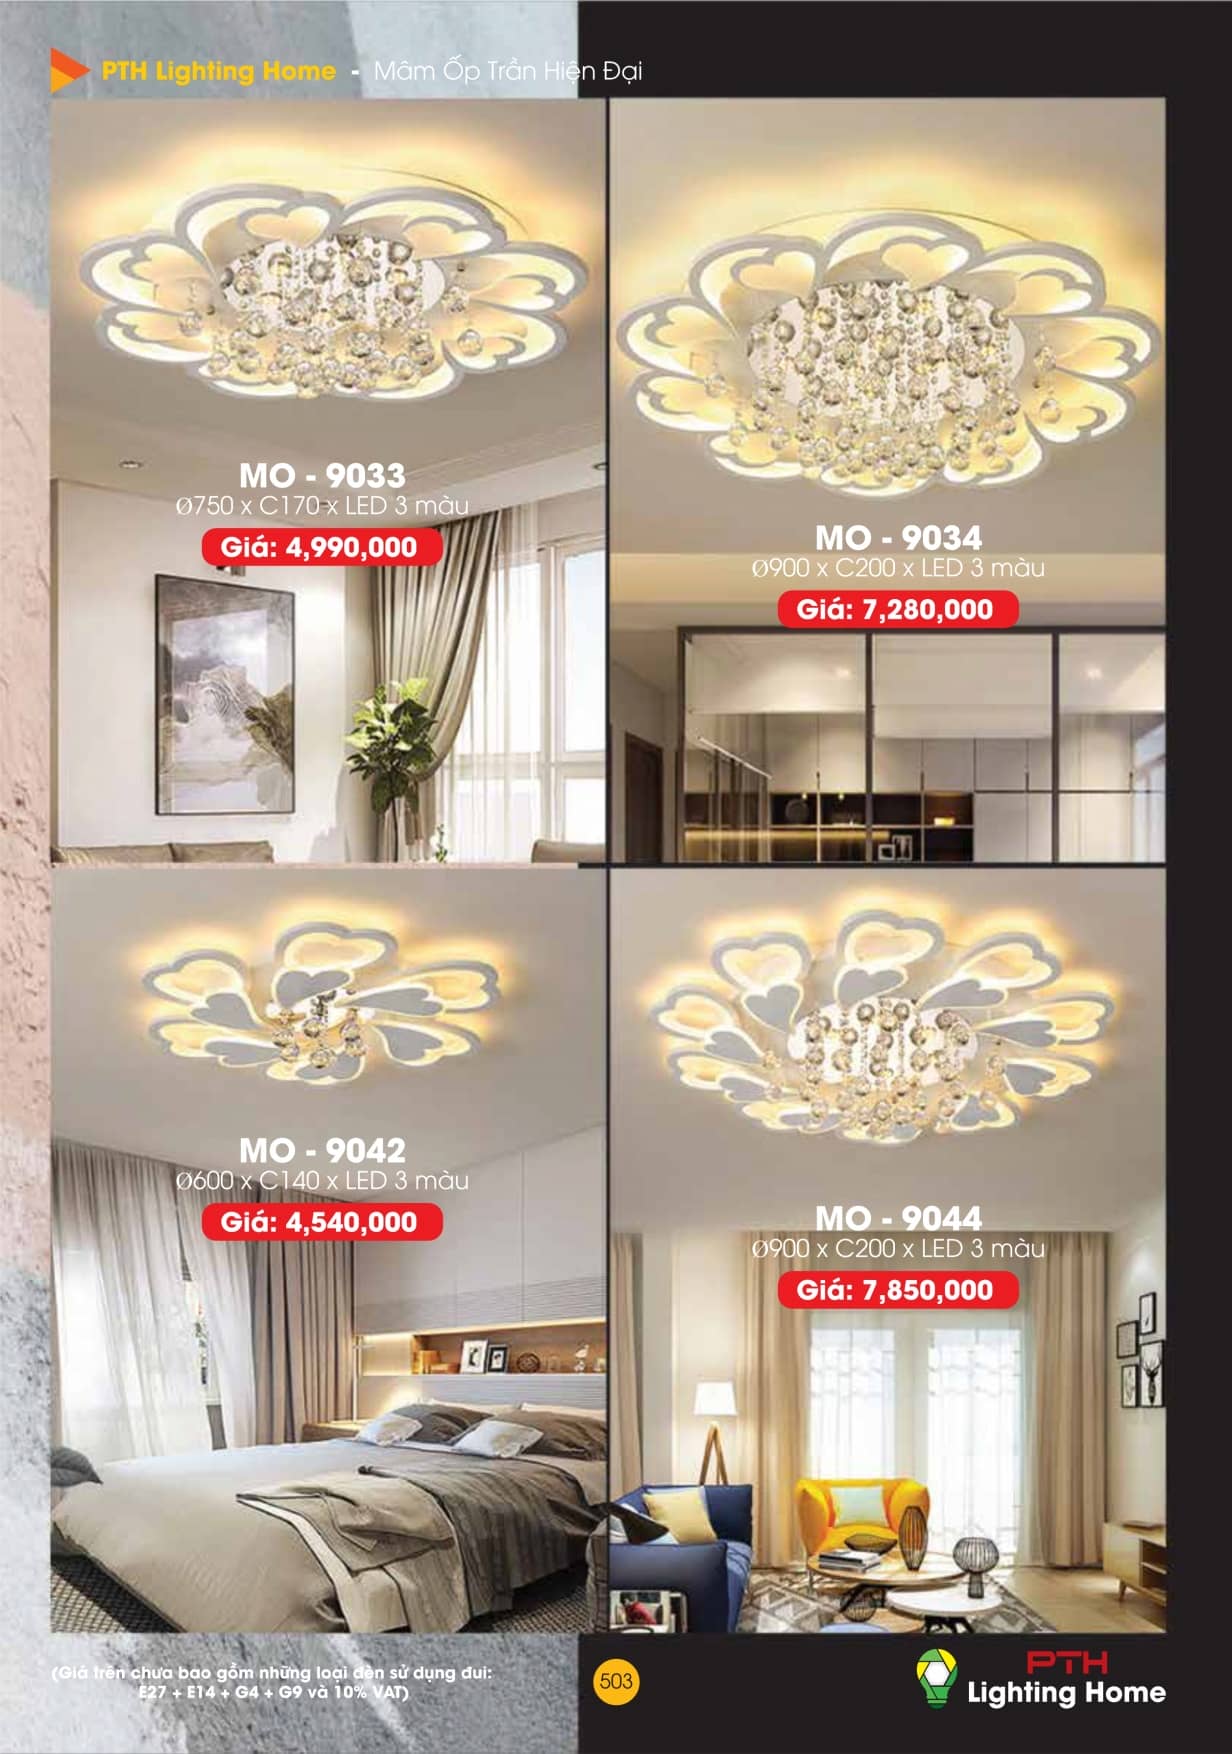 catalogue-bang-gia-den-led-trang-tri-pth-lighting-home-505